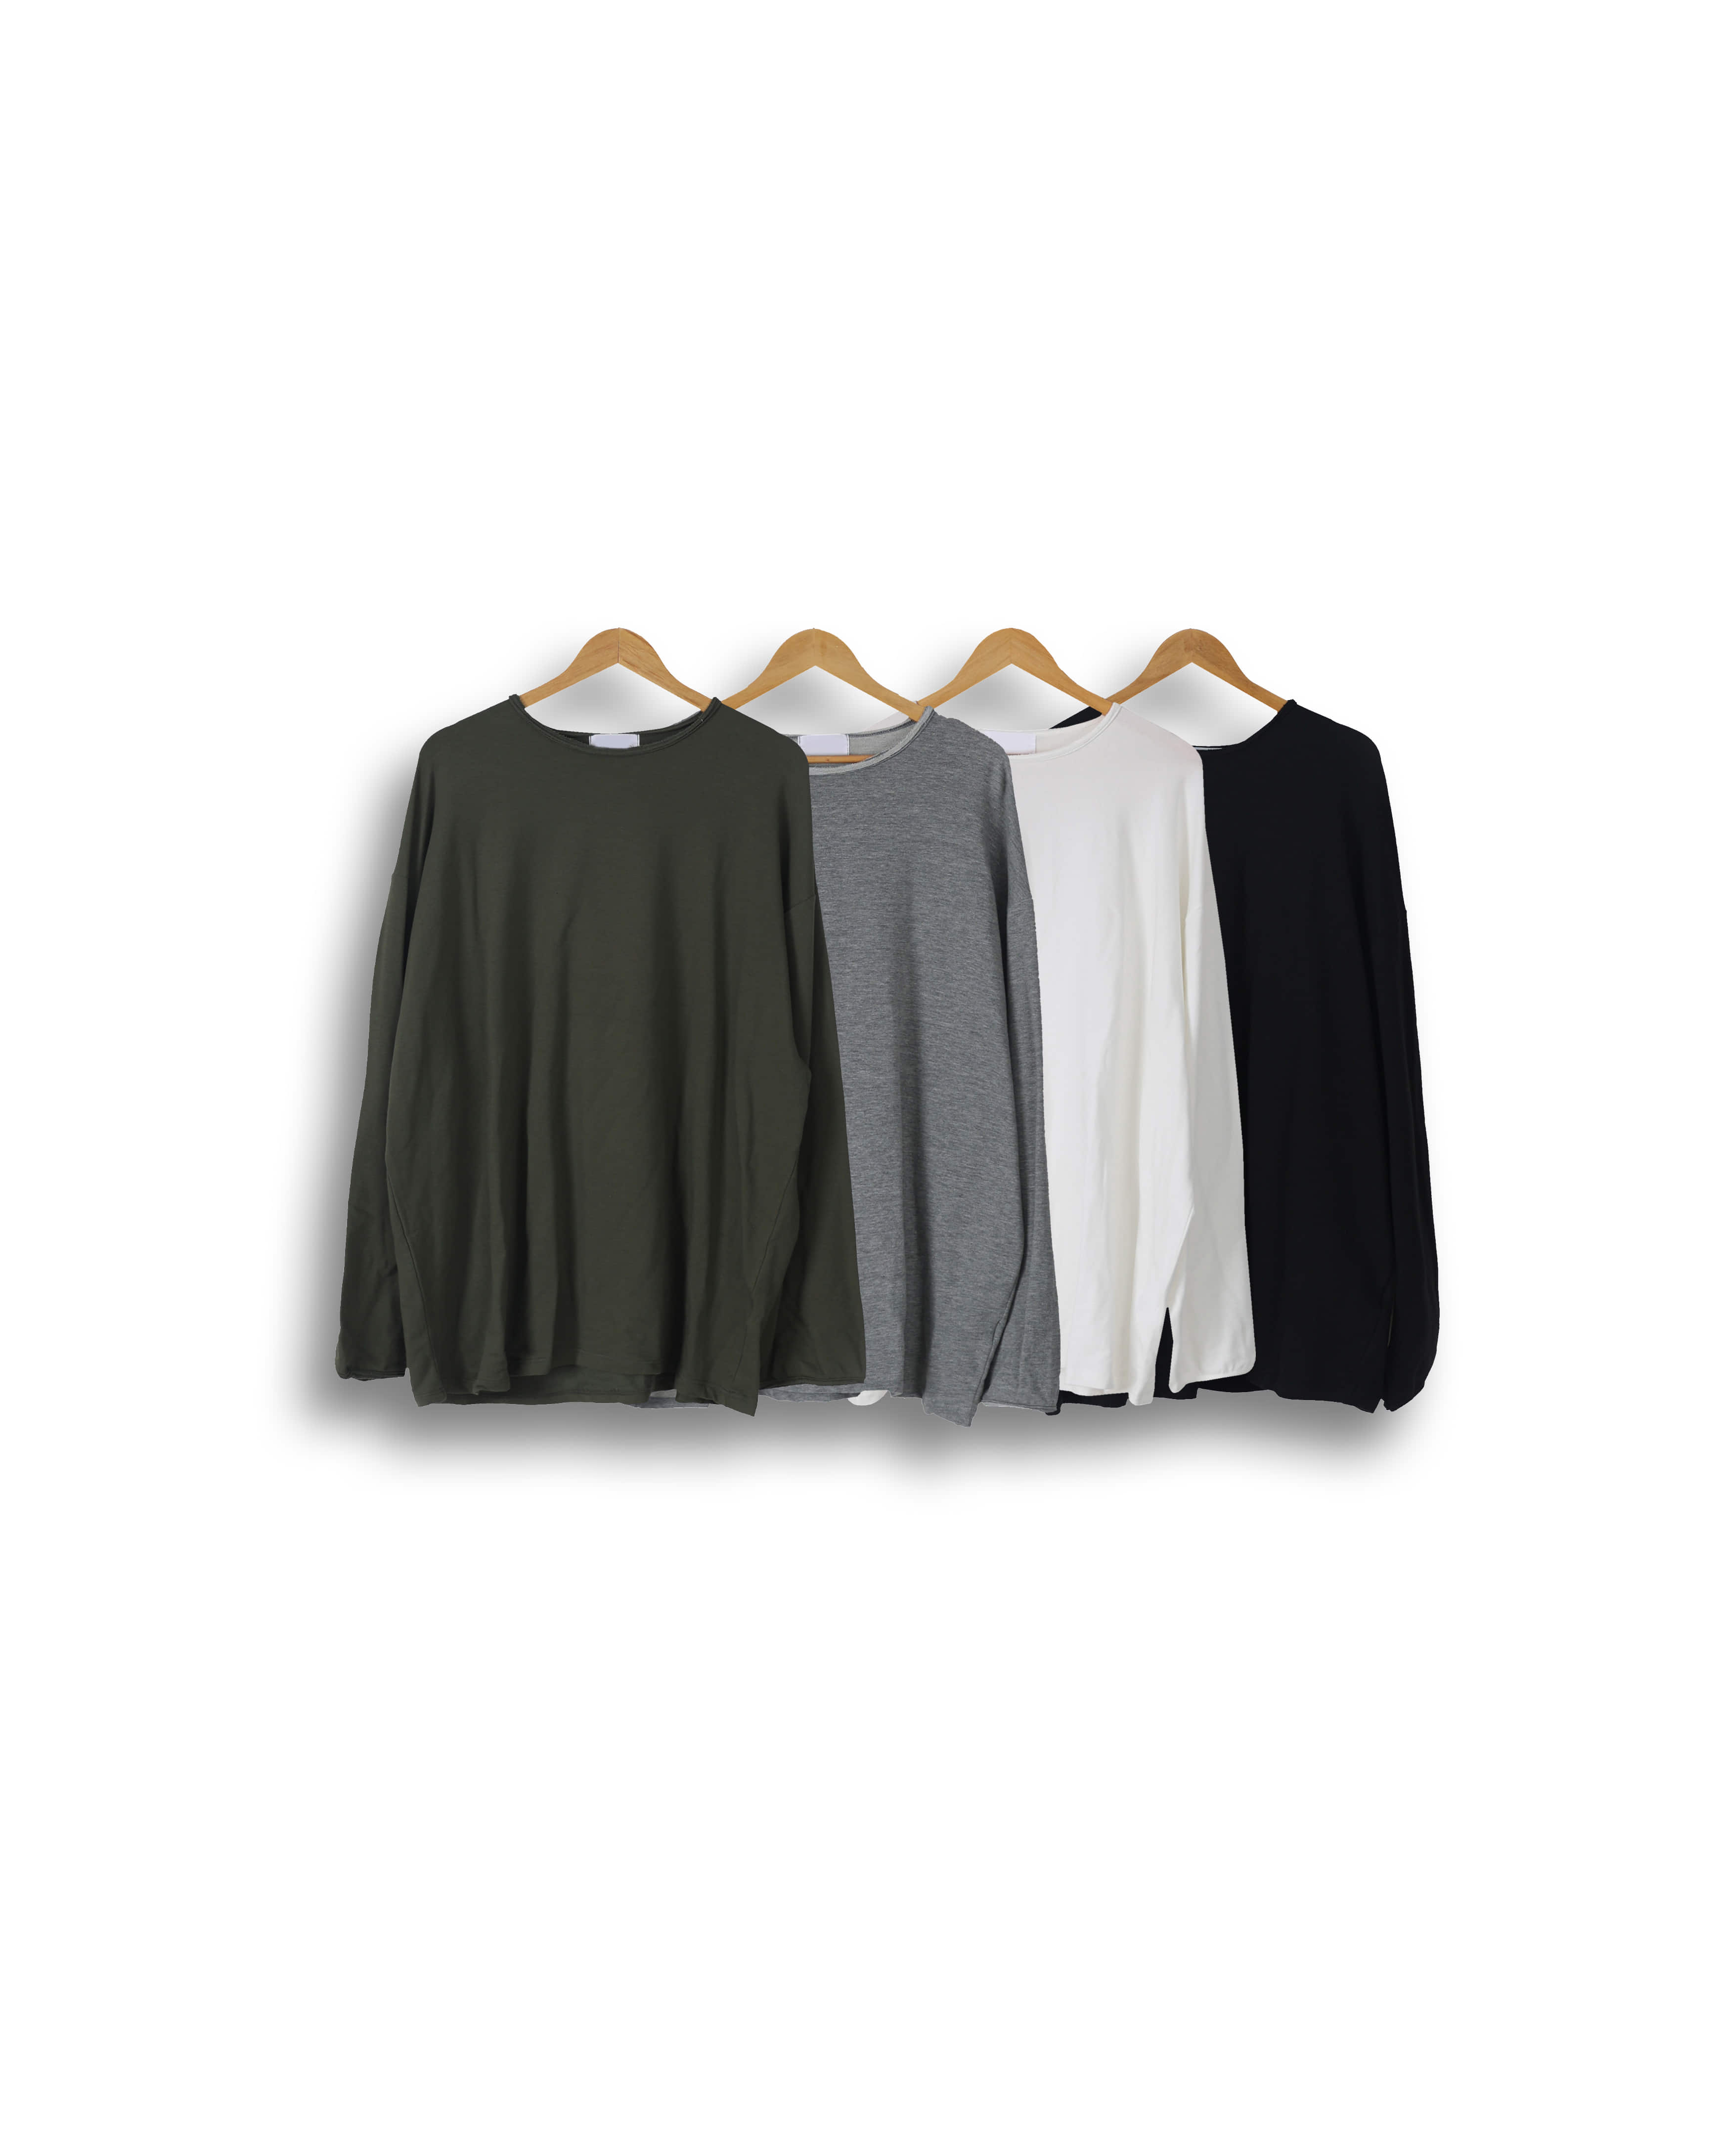 NORR Cutting Round Long Sleeves (Black/Khaki/Gray/Ivory)